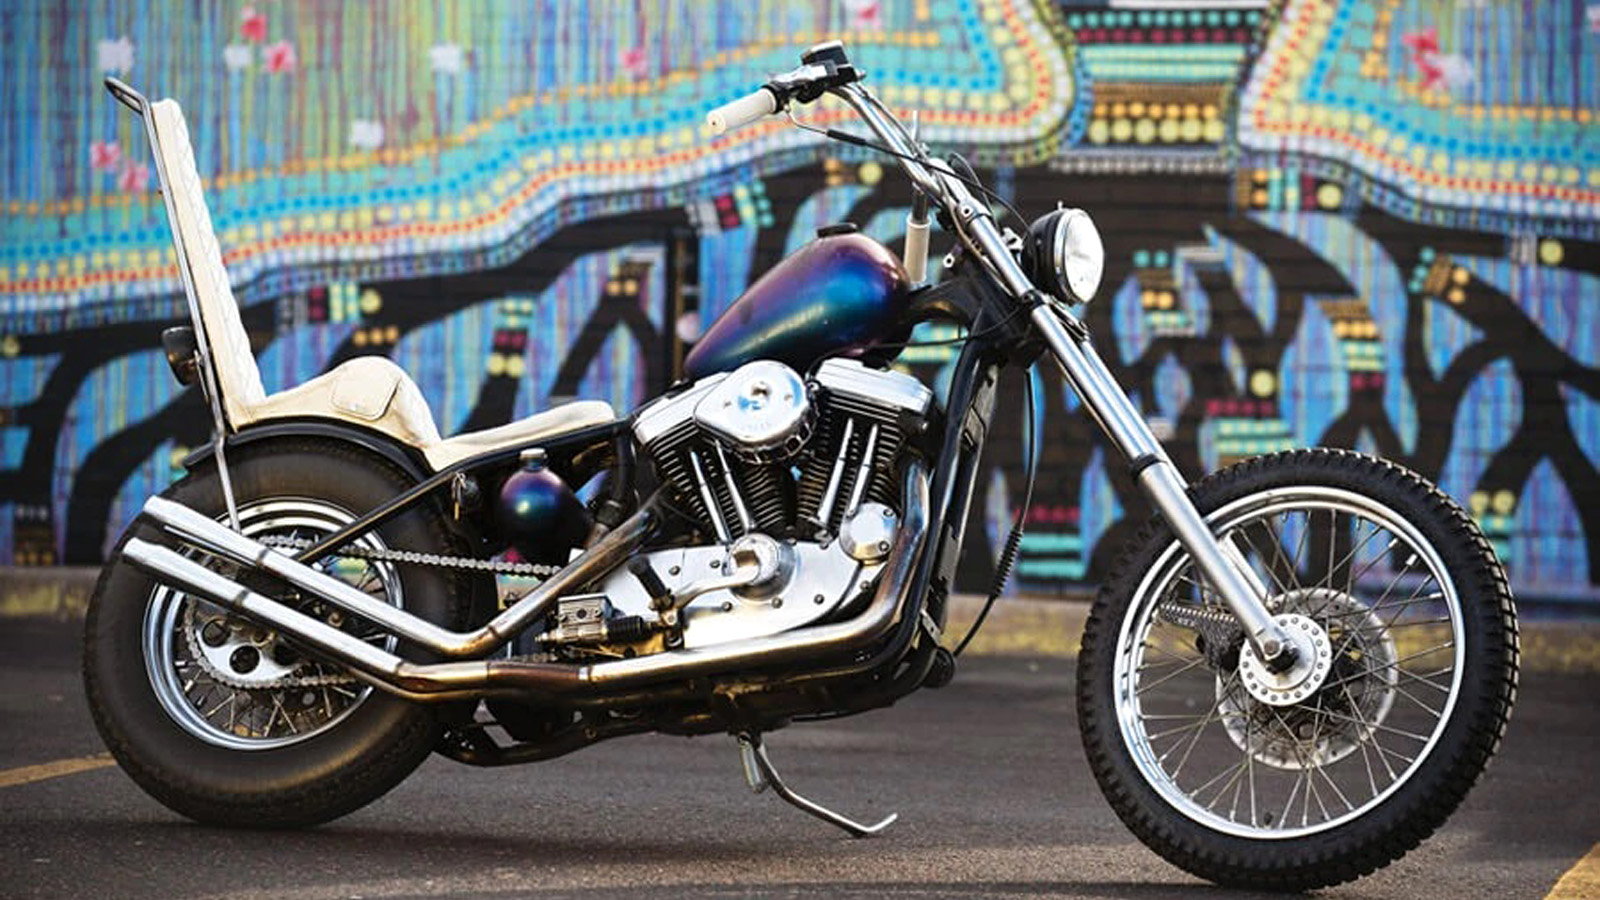 GUARDIAN BELL TRIKE For Harley Davidson gremlin mod dyna motorcycle fxr custom triumph heritage sportster chopper 1200 iron 880 vulcan goldwing honda yamaha kawasaki sport street road warrior 